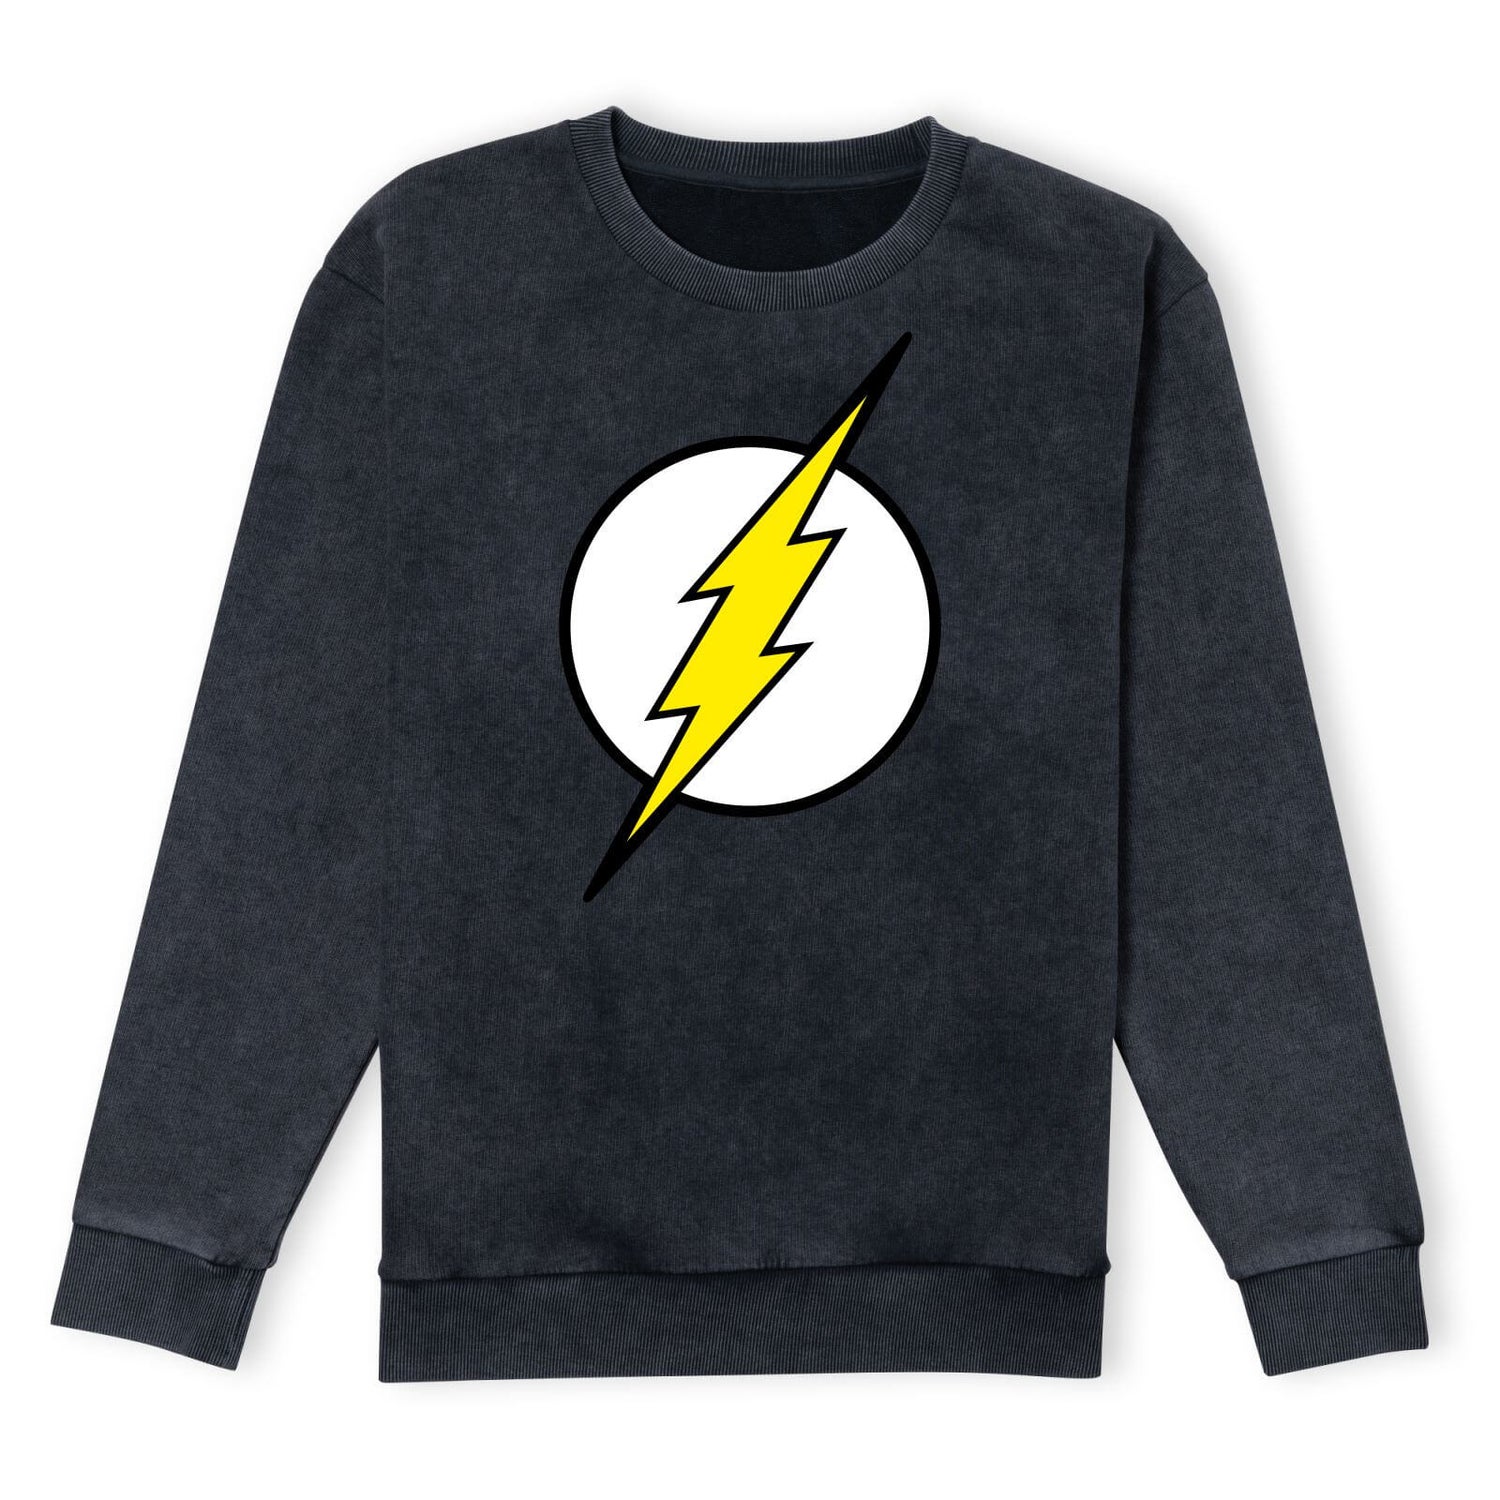 Justice League Flash Logo Sweatshirt - Black Acid Wash